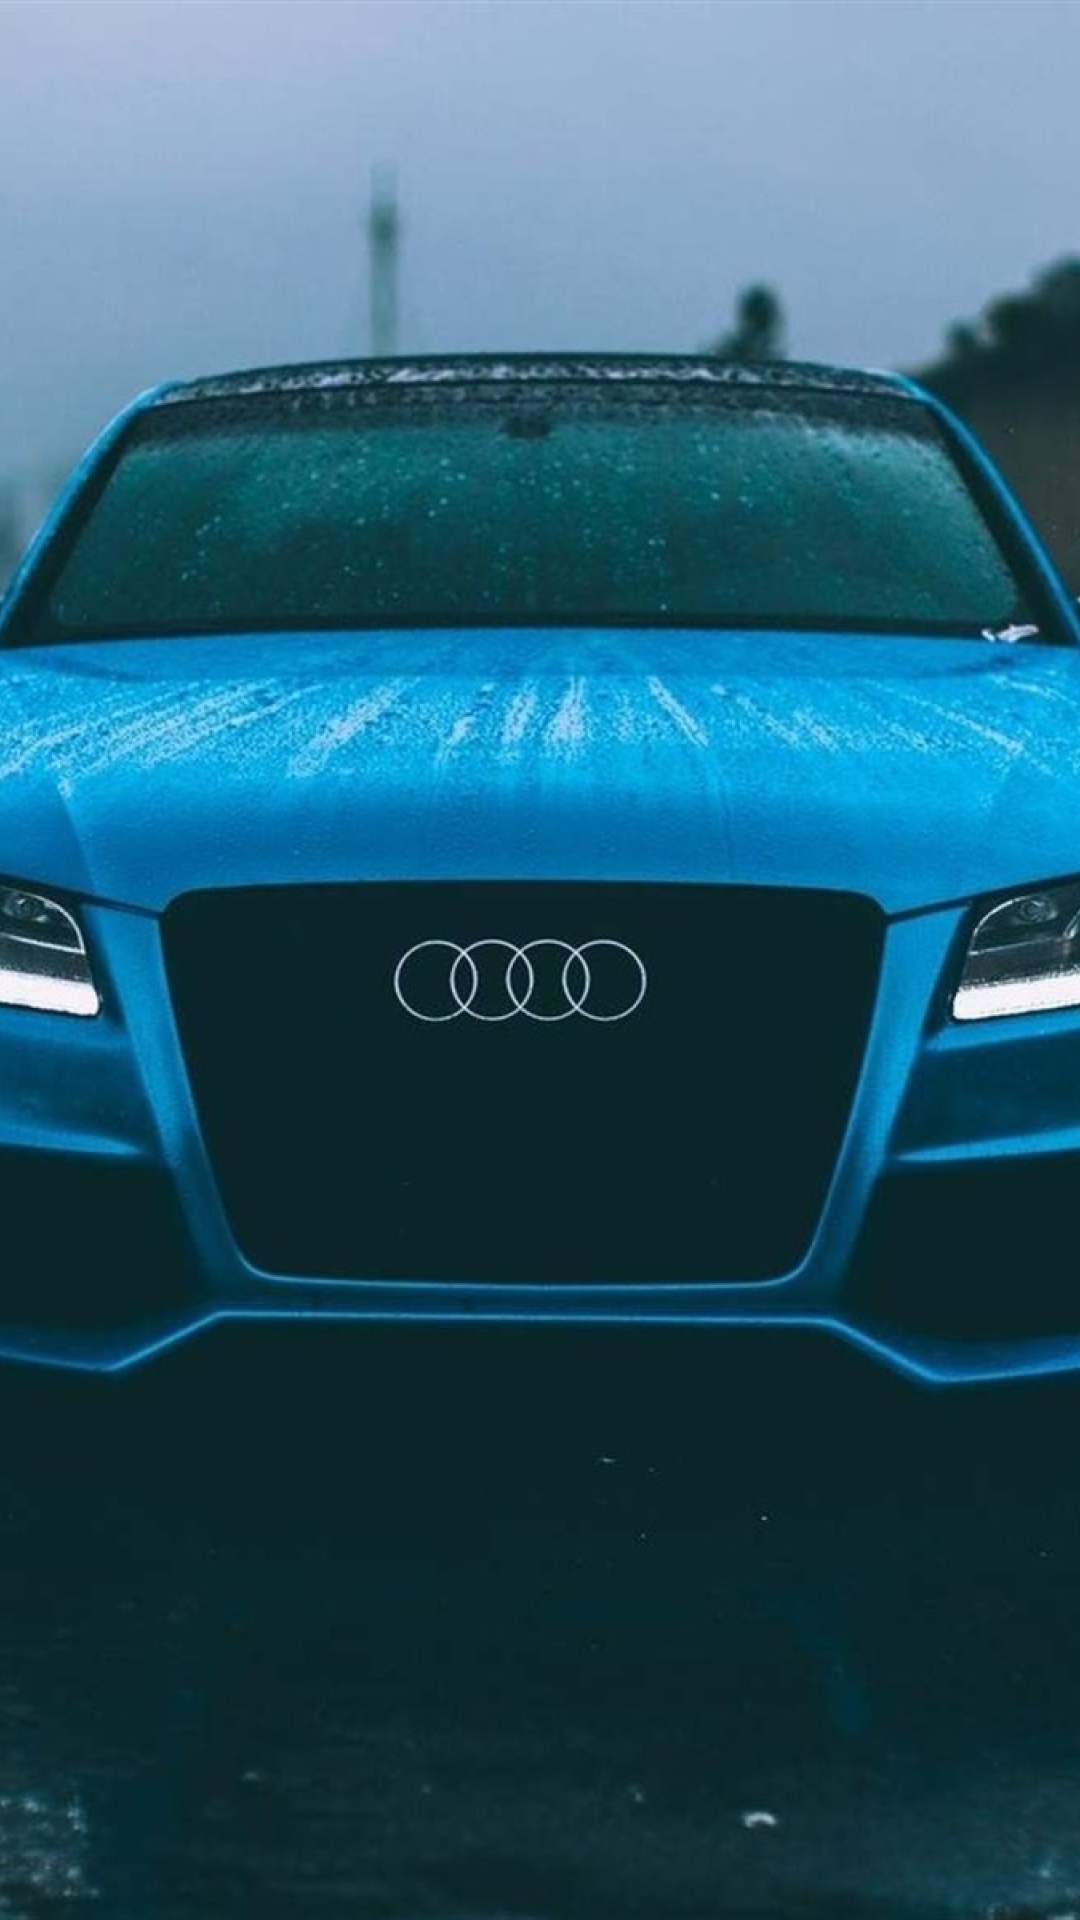 Audi S5 Car in Rain wallpaper 1080x1920